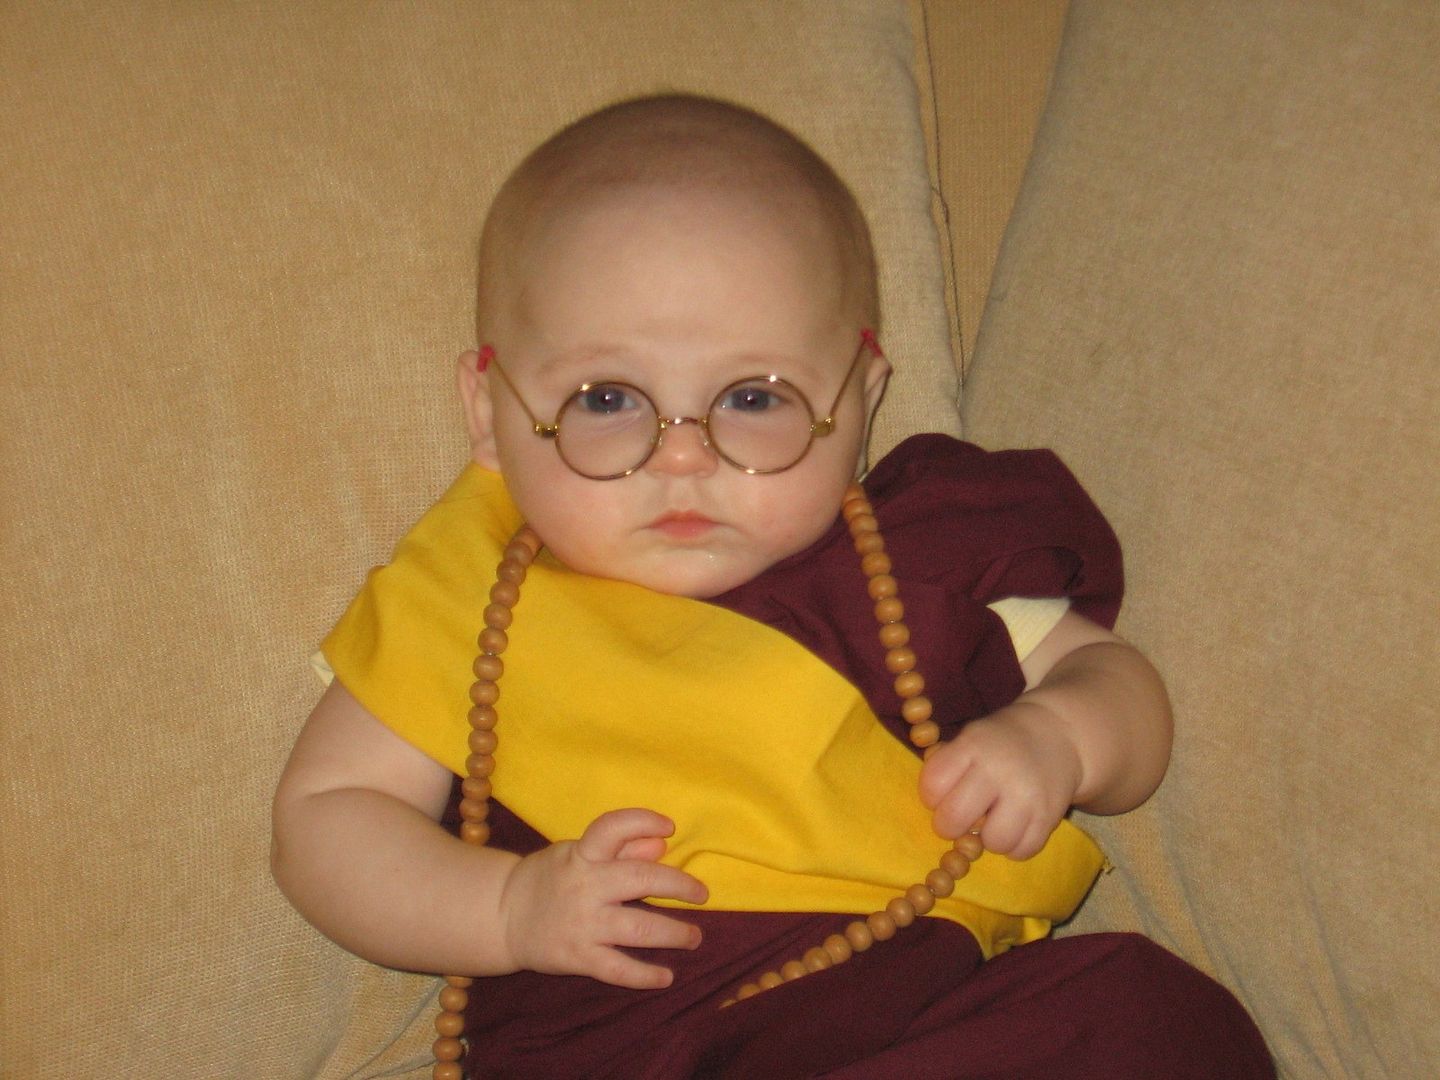 Creative Halloween costumes for baby: DIY baby Dali Lama costume